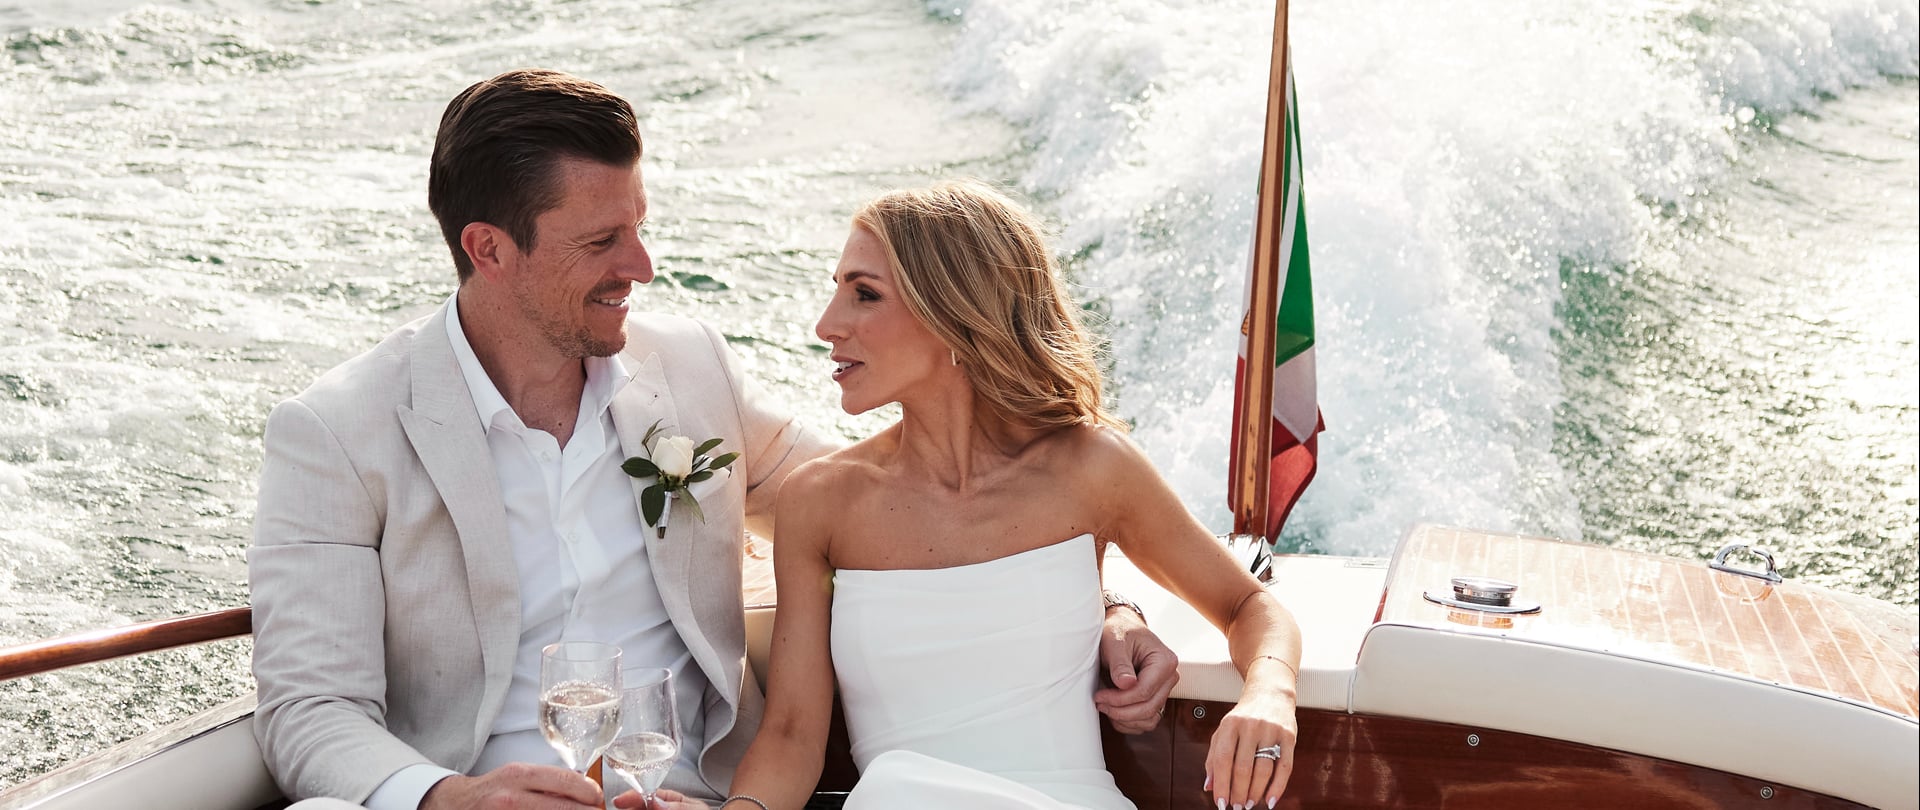 Britt & Aaron Wedding Video Filmed atLake Como,Italy